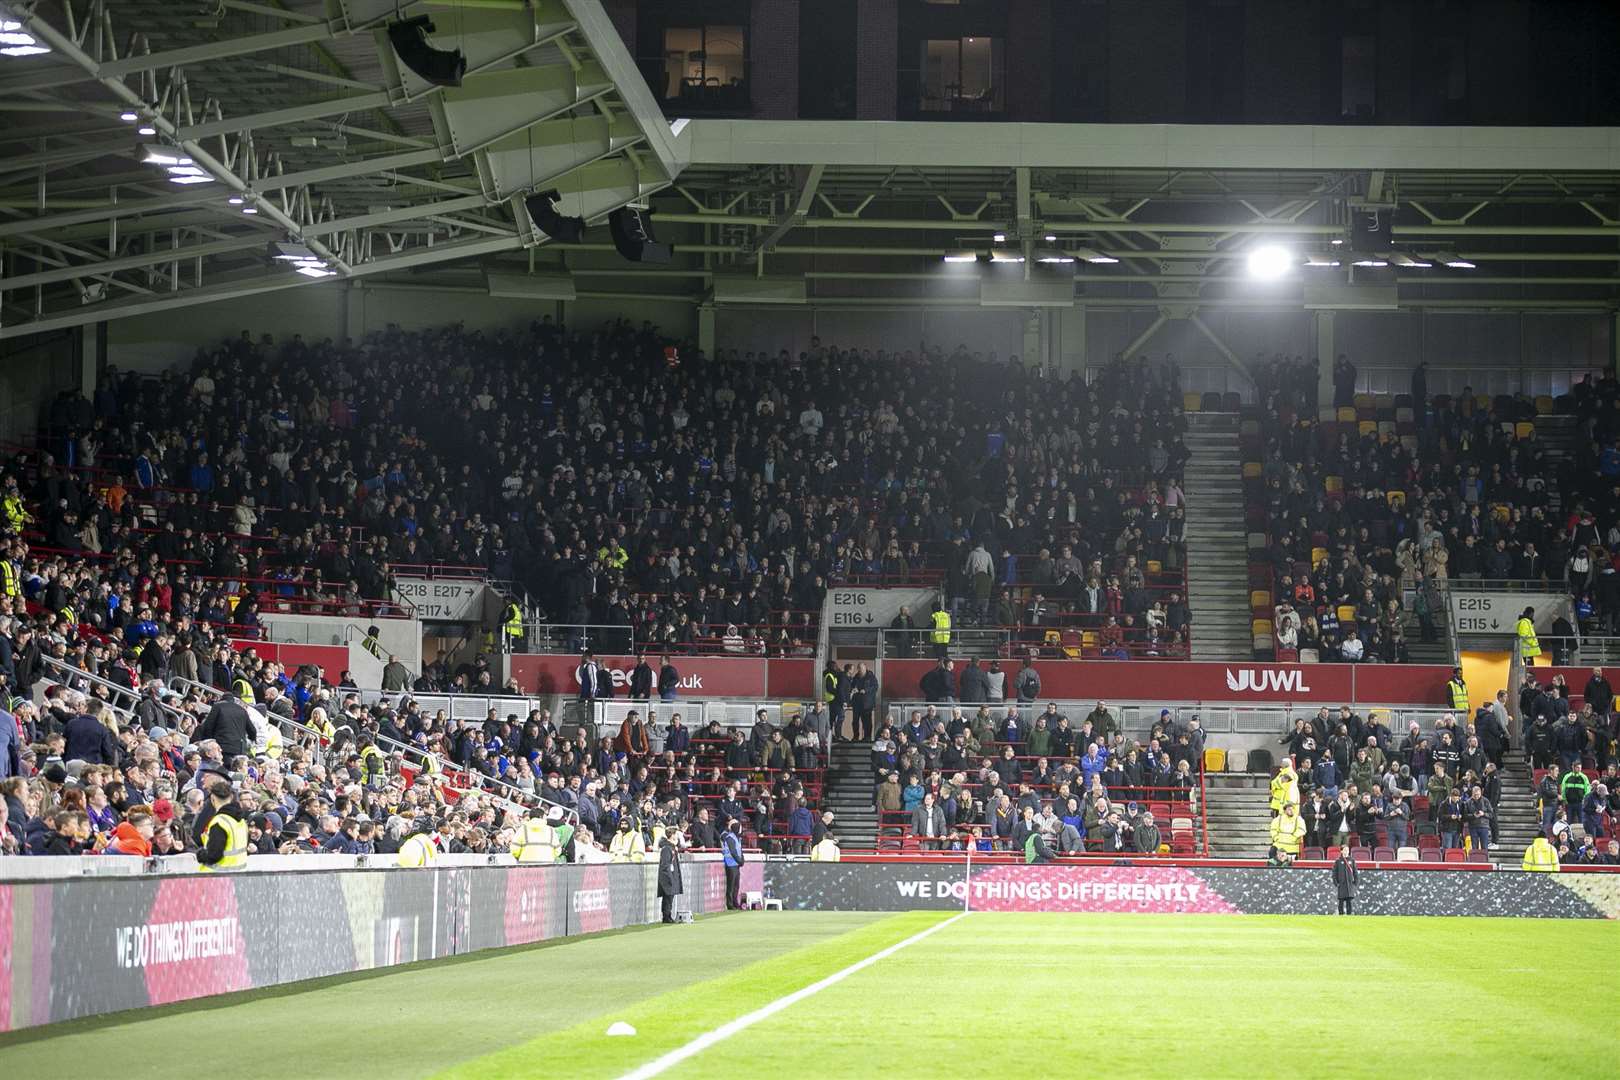 Gillingham fans at Brentford's impressive new Gtech Community stadium Picture: KPI